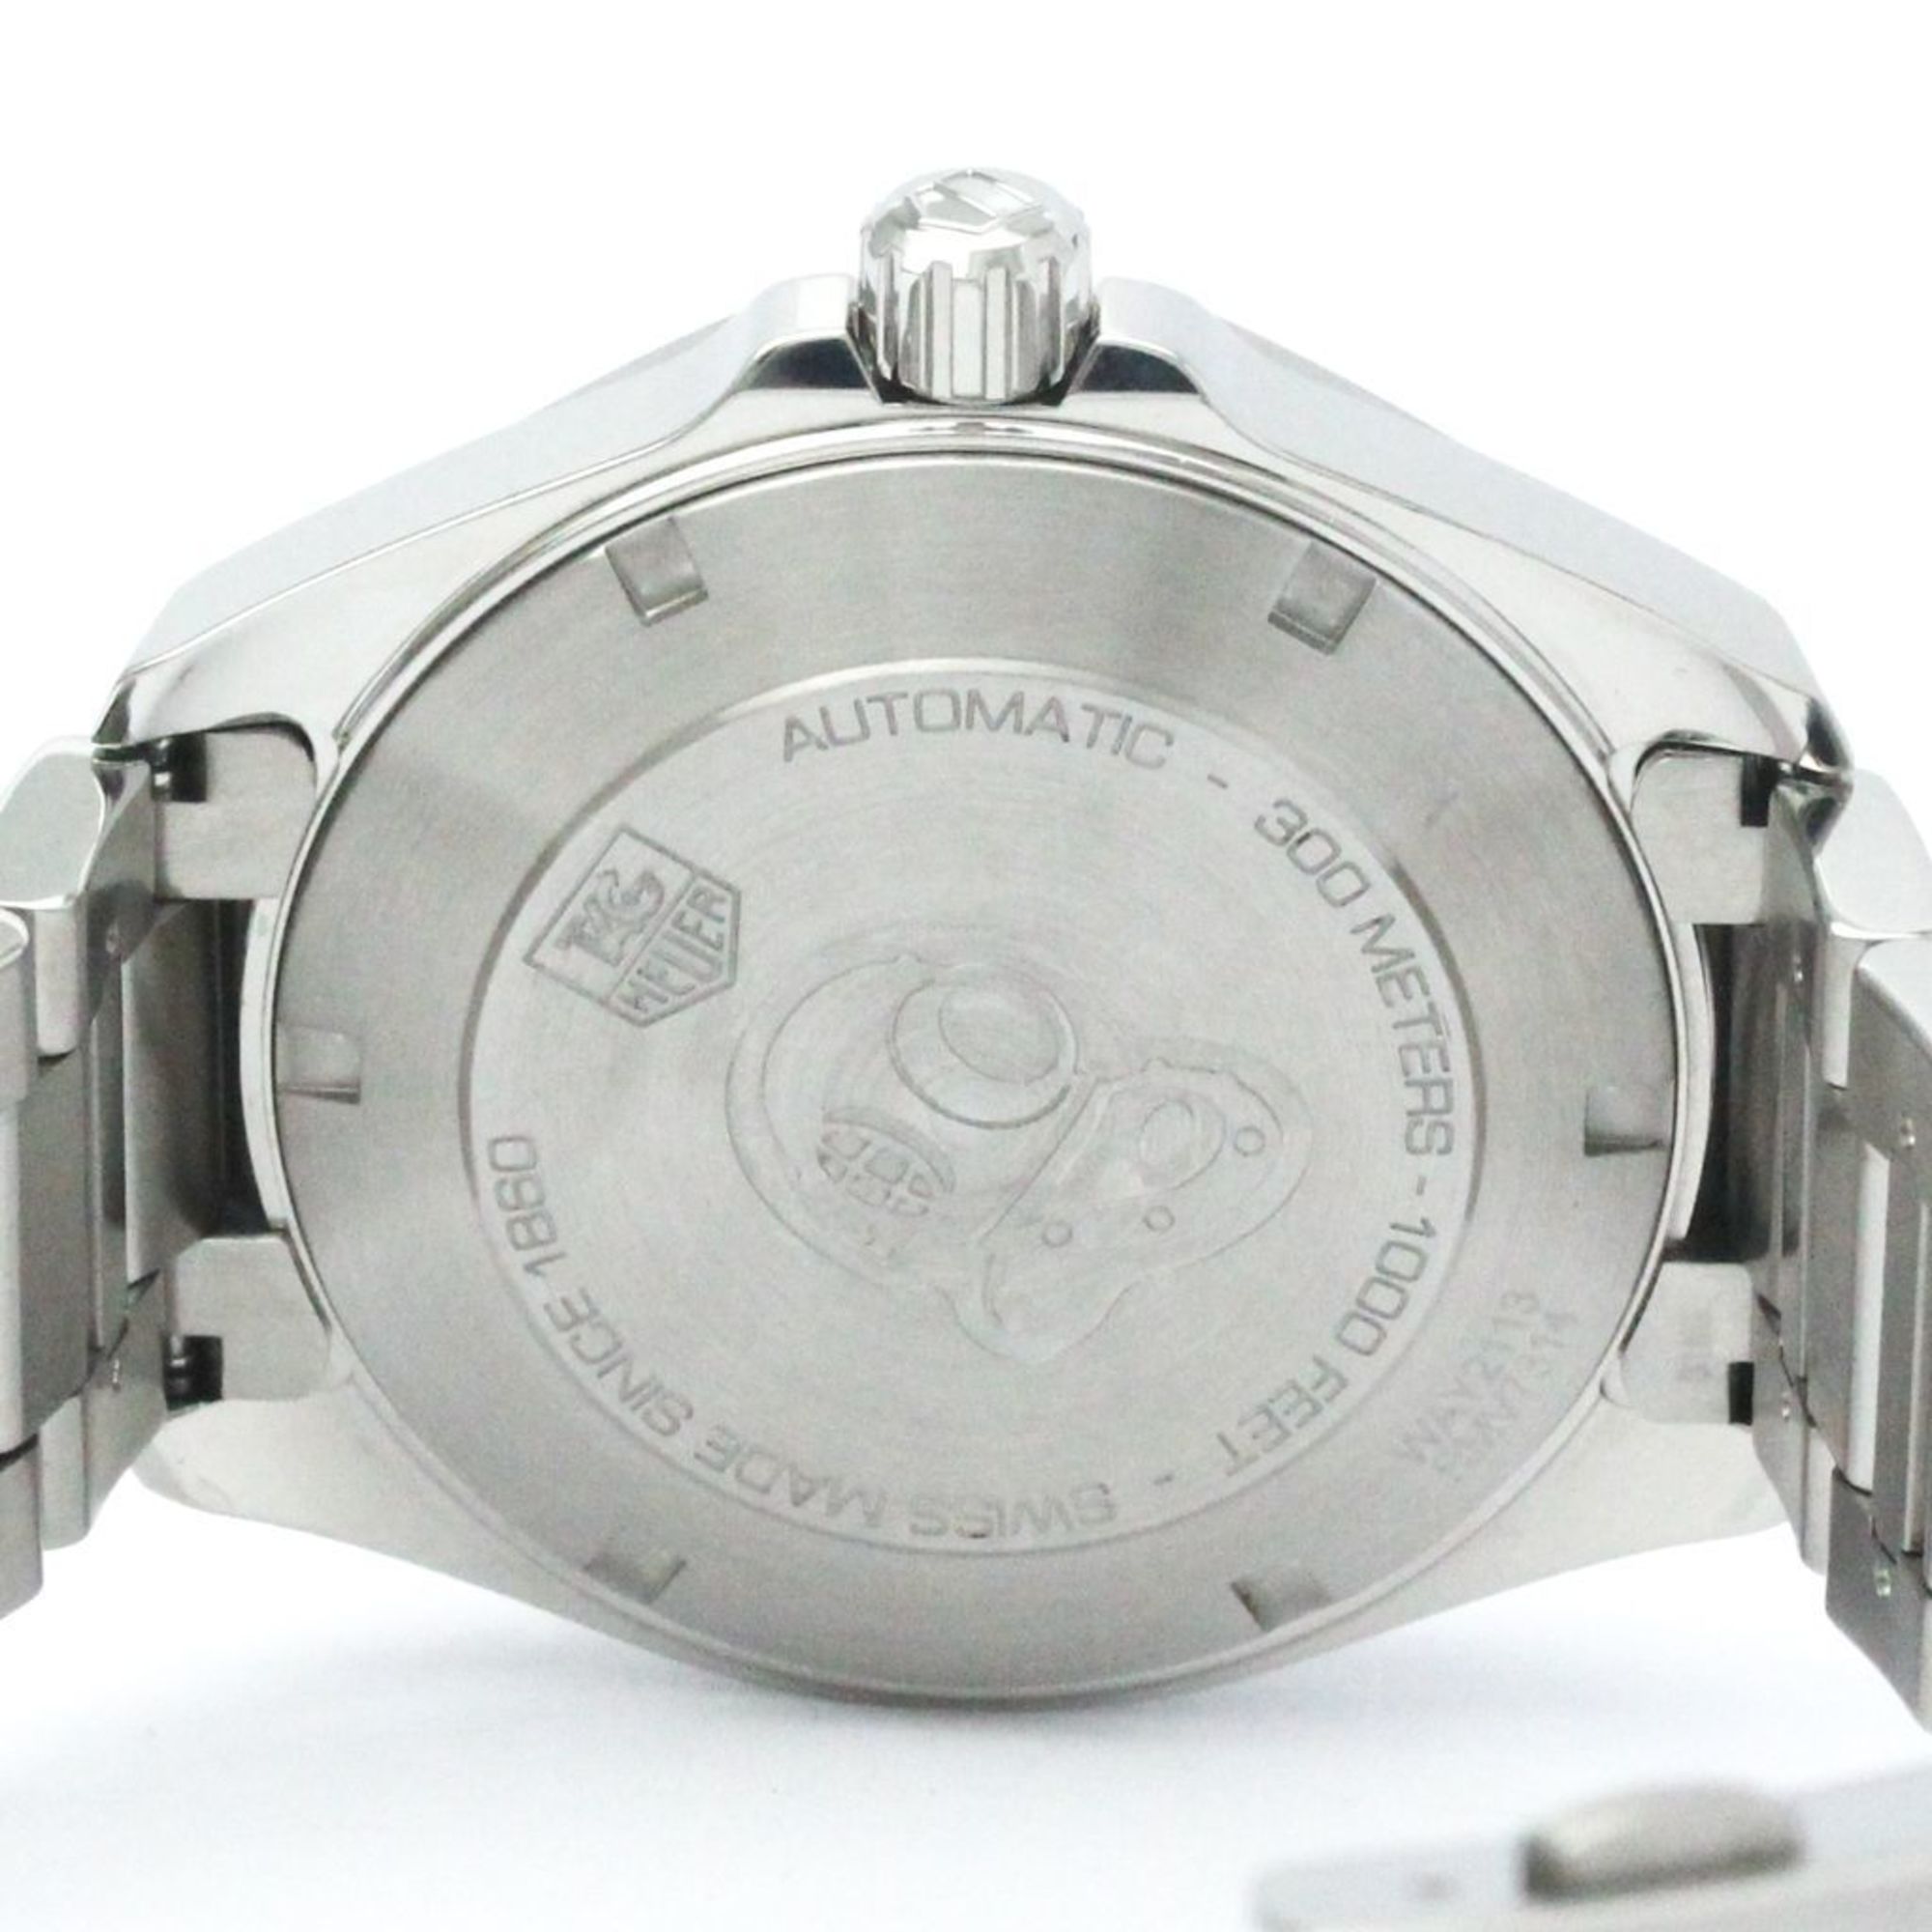 Polished TAG HEUER Aquaracer Caliber 5 Steel Automatic Watch WAY2113 BF566053